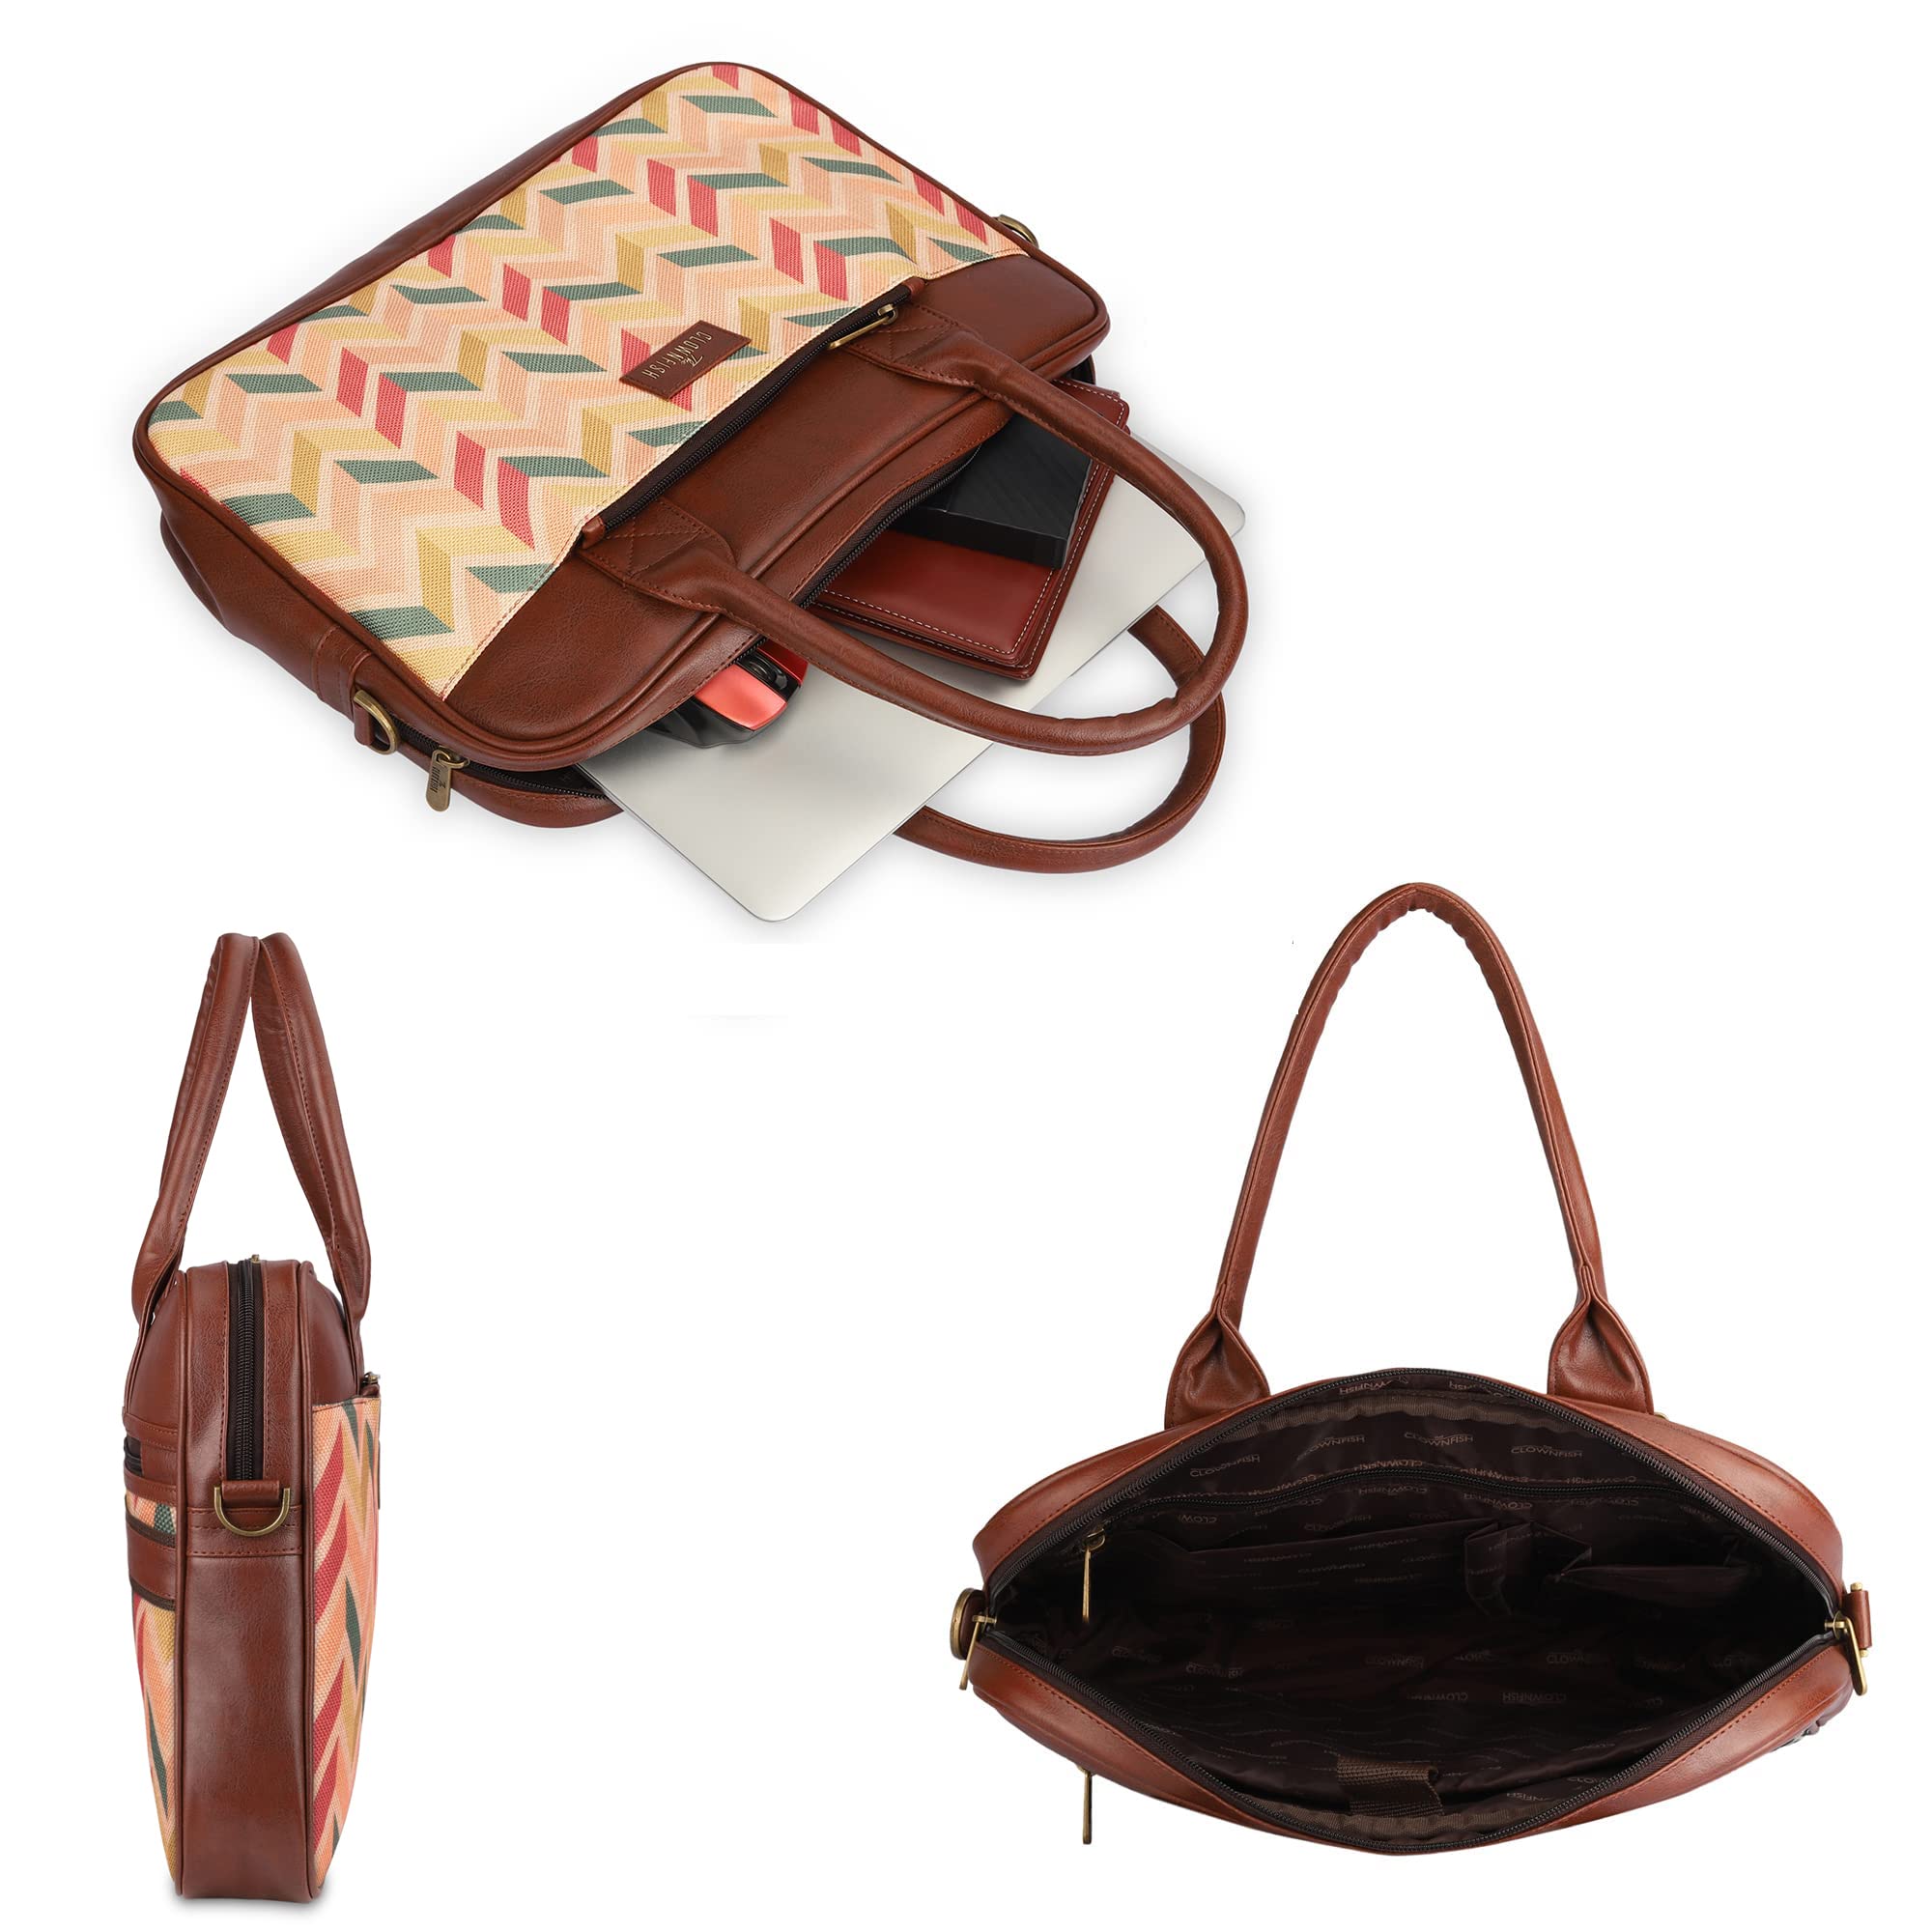 The Clownfish Deborah Series 15.6 inch Laptop Bag for Women Printed Handicraft Fabric & Faux Leather Office Bag Briefcase Messenger Sling Handbag Business Bag (Cream)